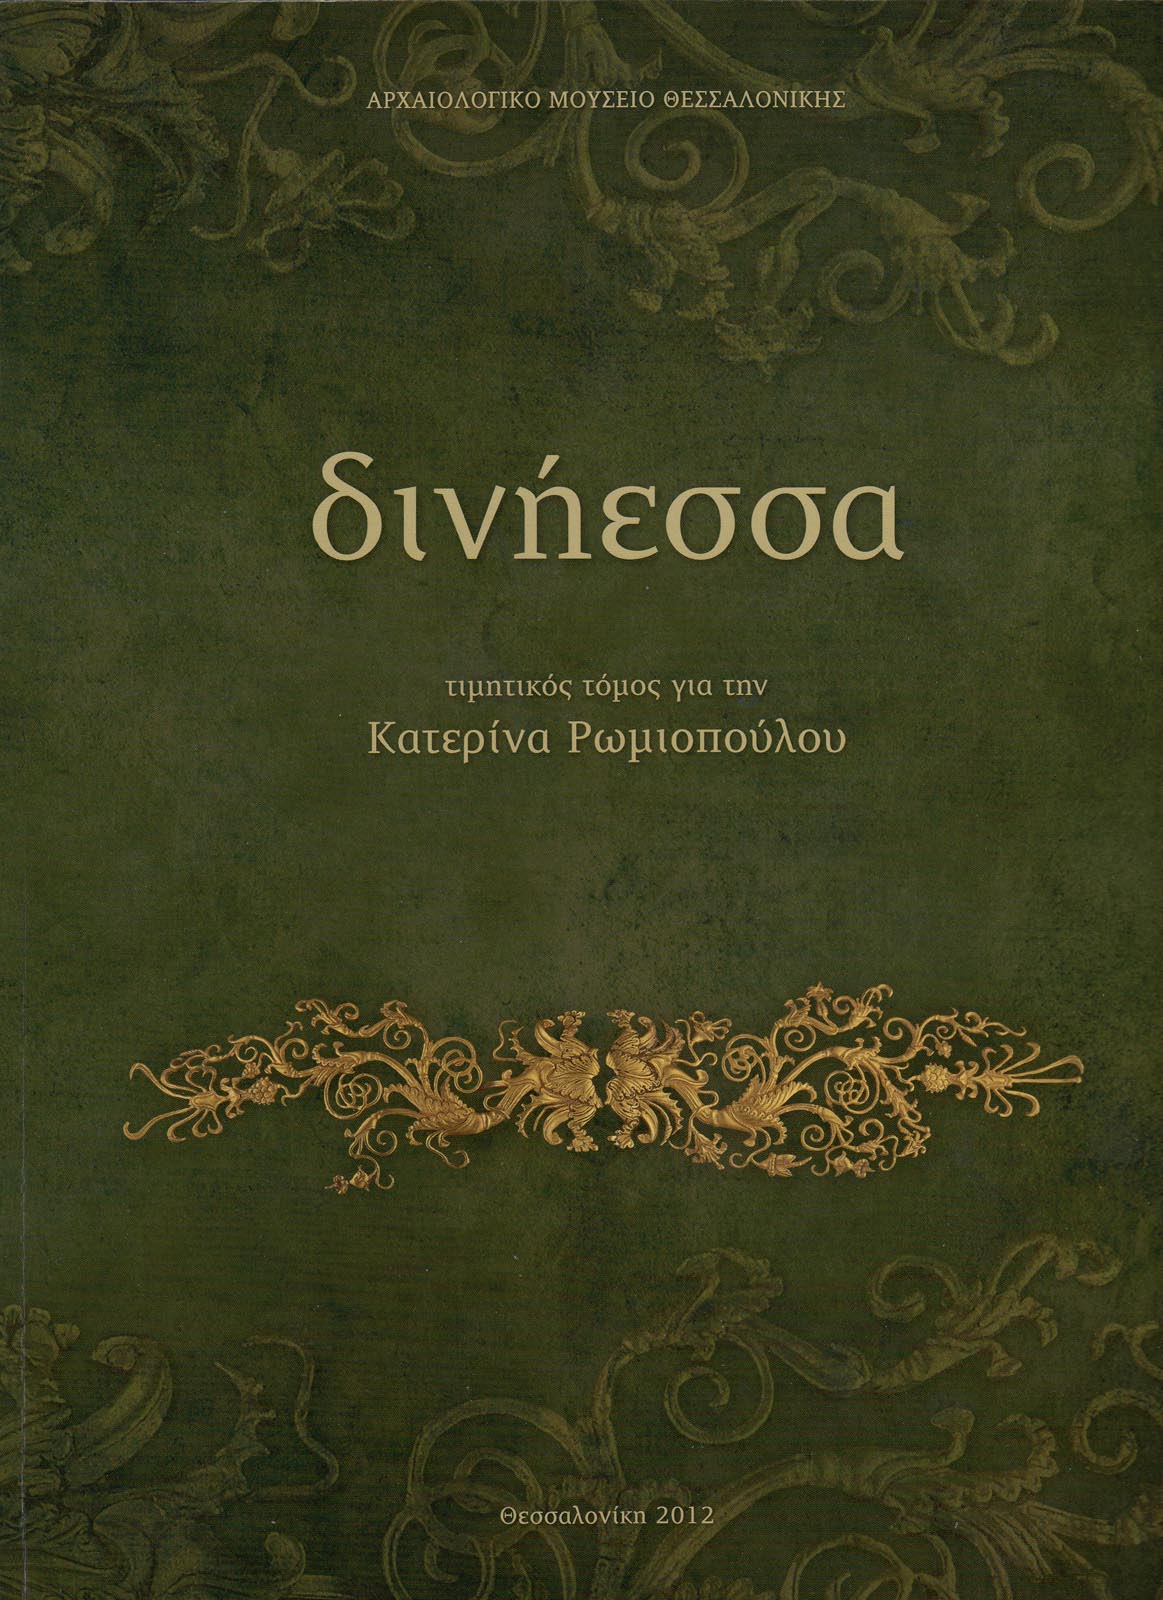 Diniessa, Honorary Volume for Dr. Katerina Romiopoulou. Adam-Veleni, P., Tzanavari, K. (eds.). Thessaloniki 2012 (ISBN 978-960-9621-09-0).